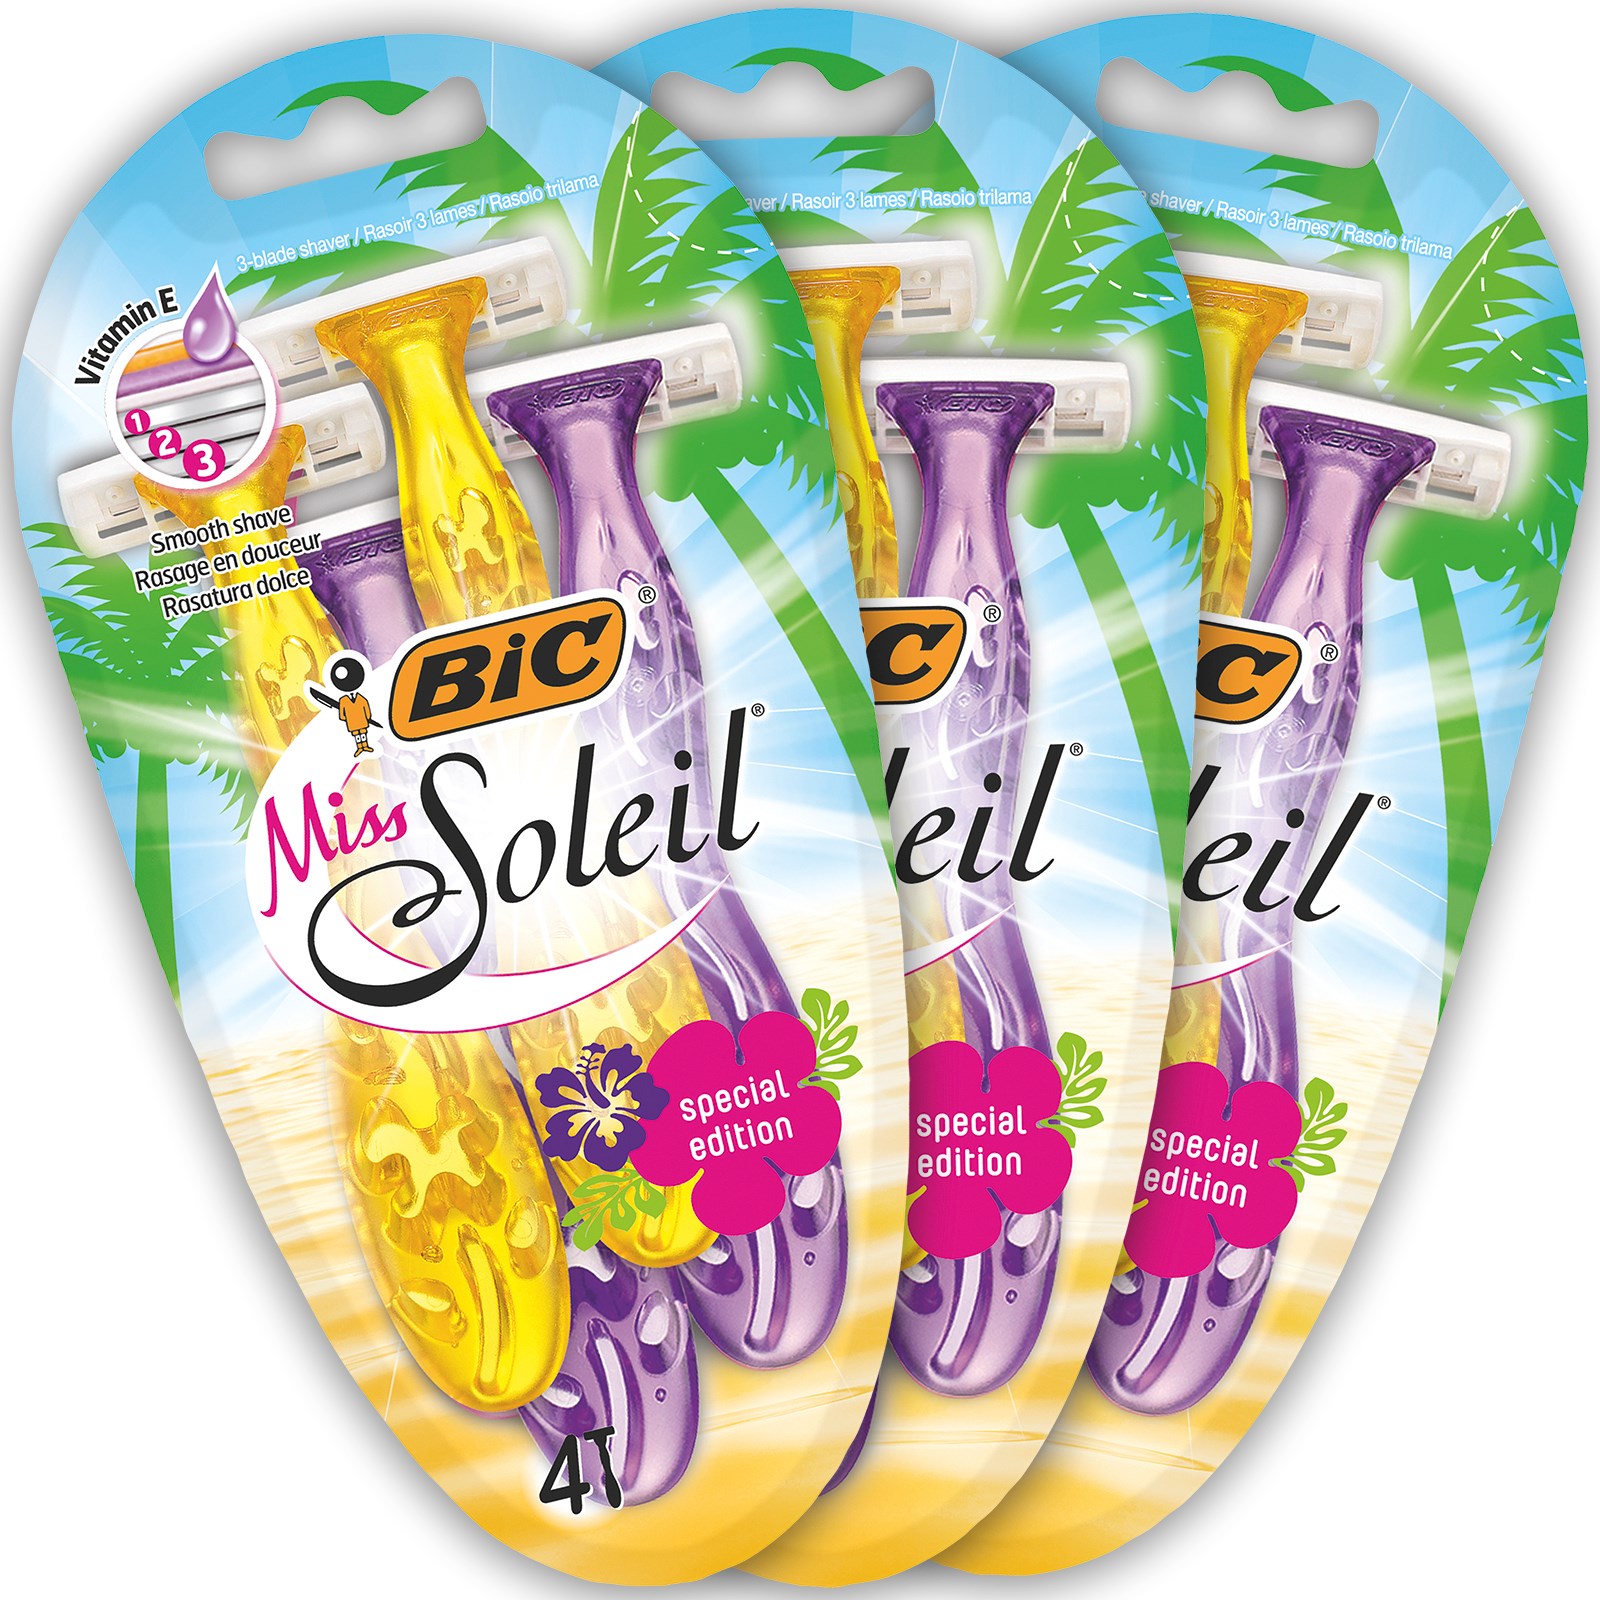 BIC Soleil Miss Soleil Special Edition